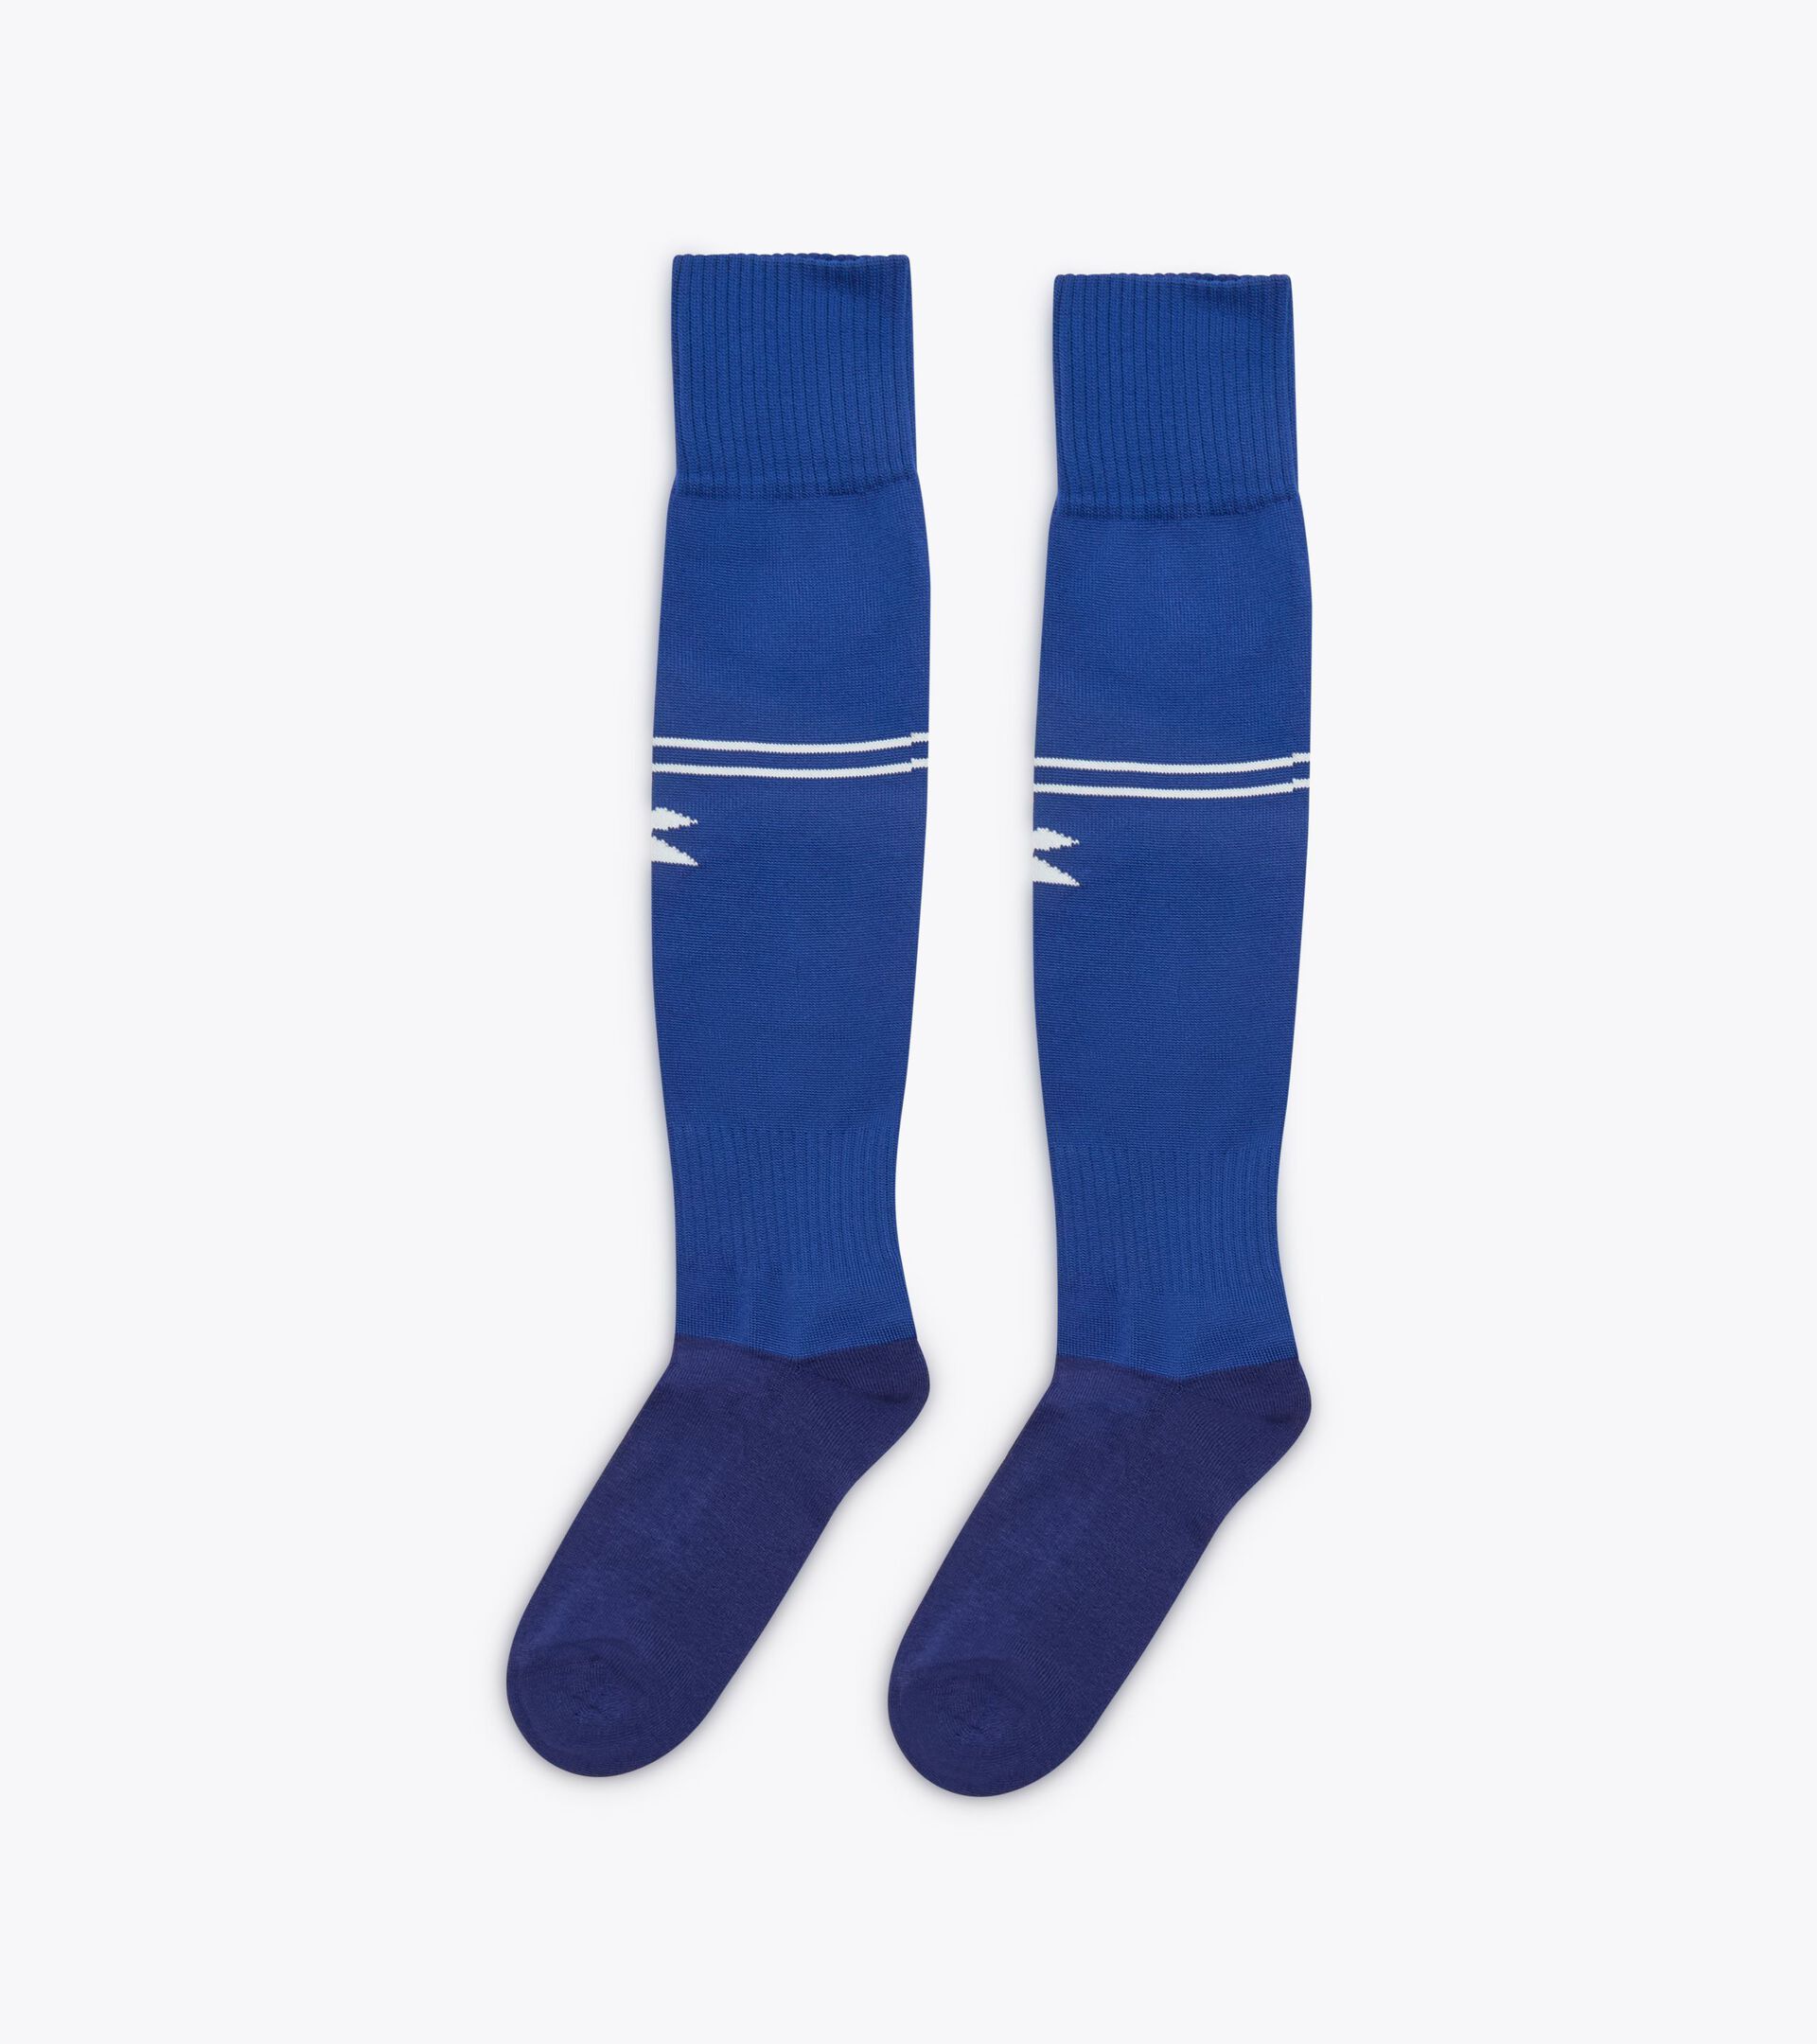 Calcio socks SOCKS SCUDETTO NAVY - Diadora